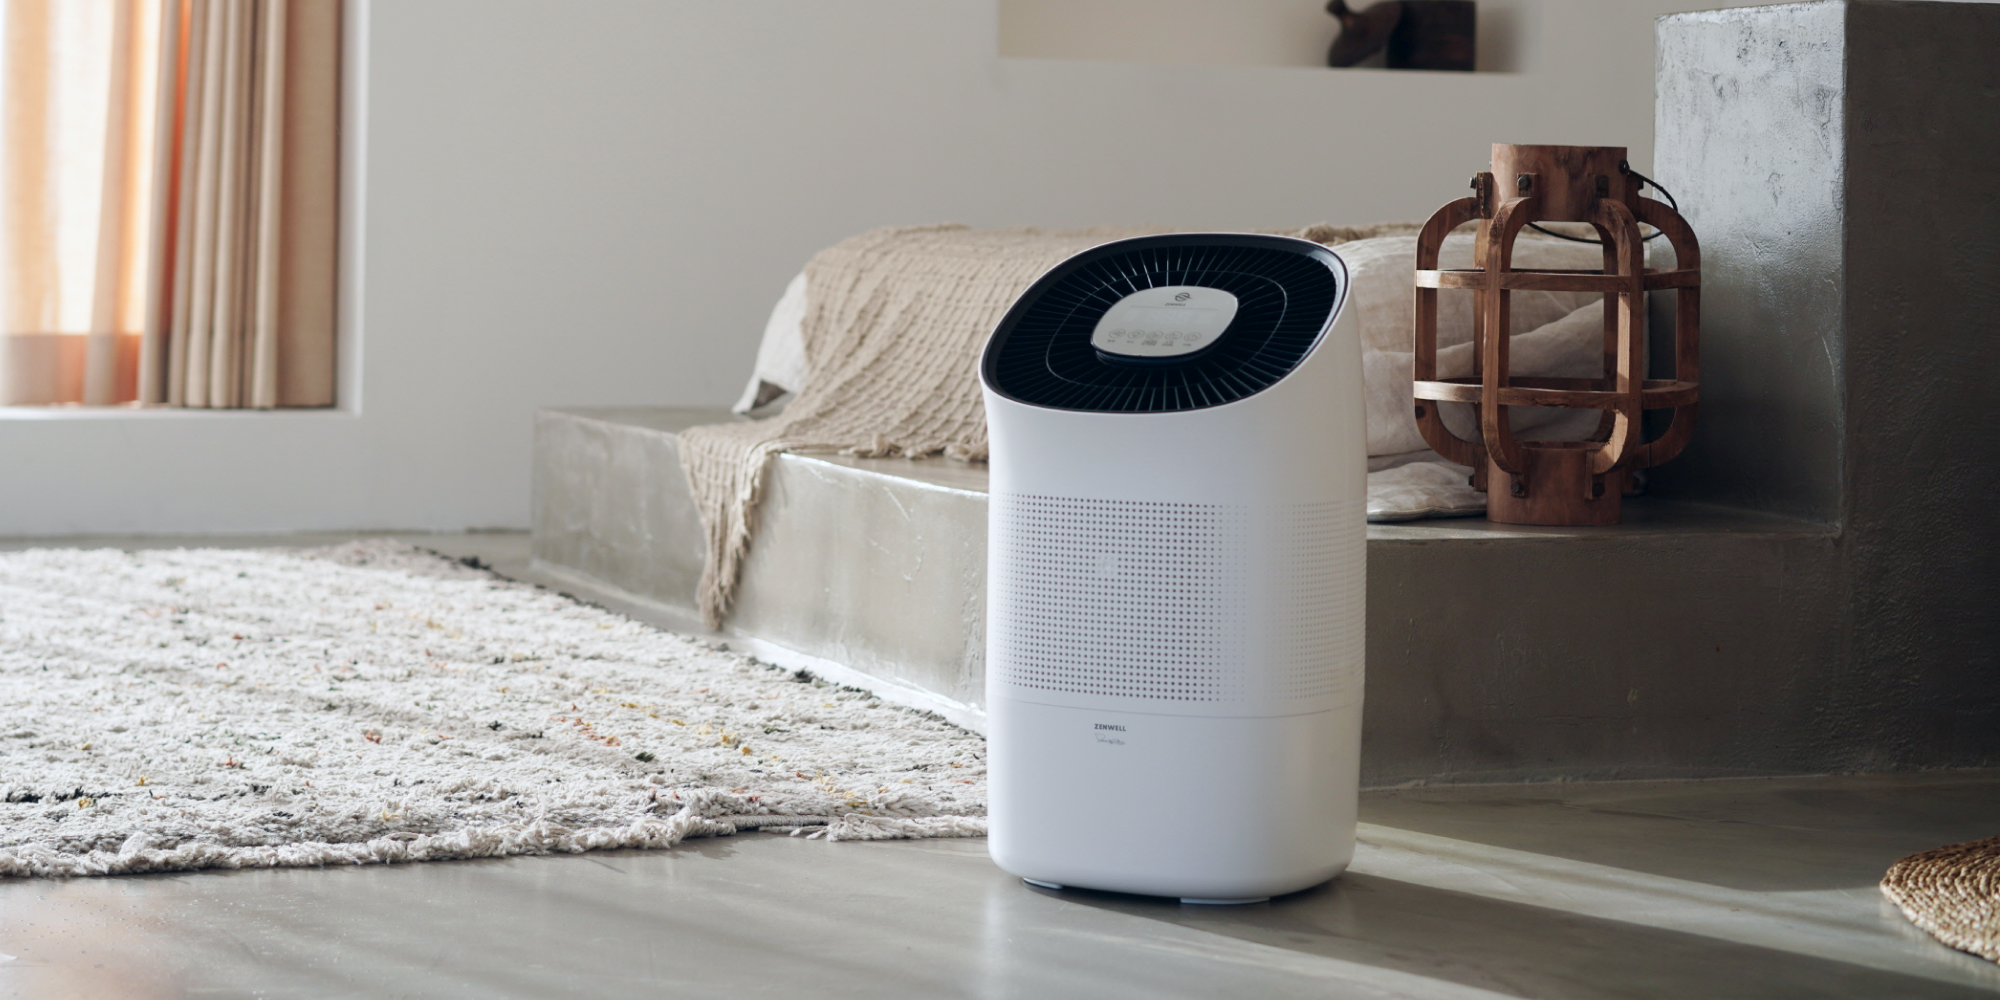 Zenwell Super Air Purifier + Humidifier Smart on modern bedroom floor